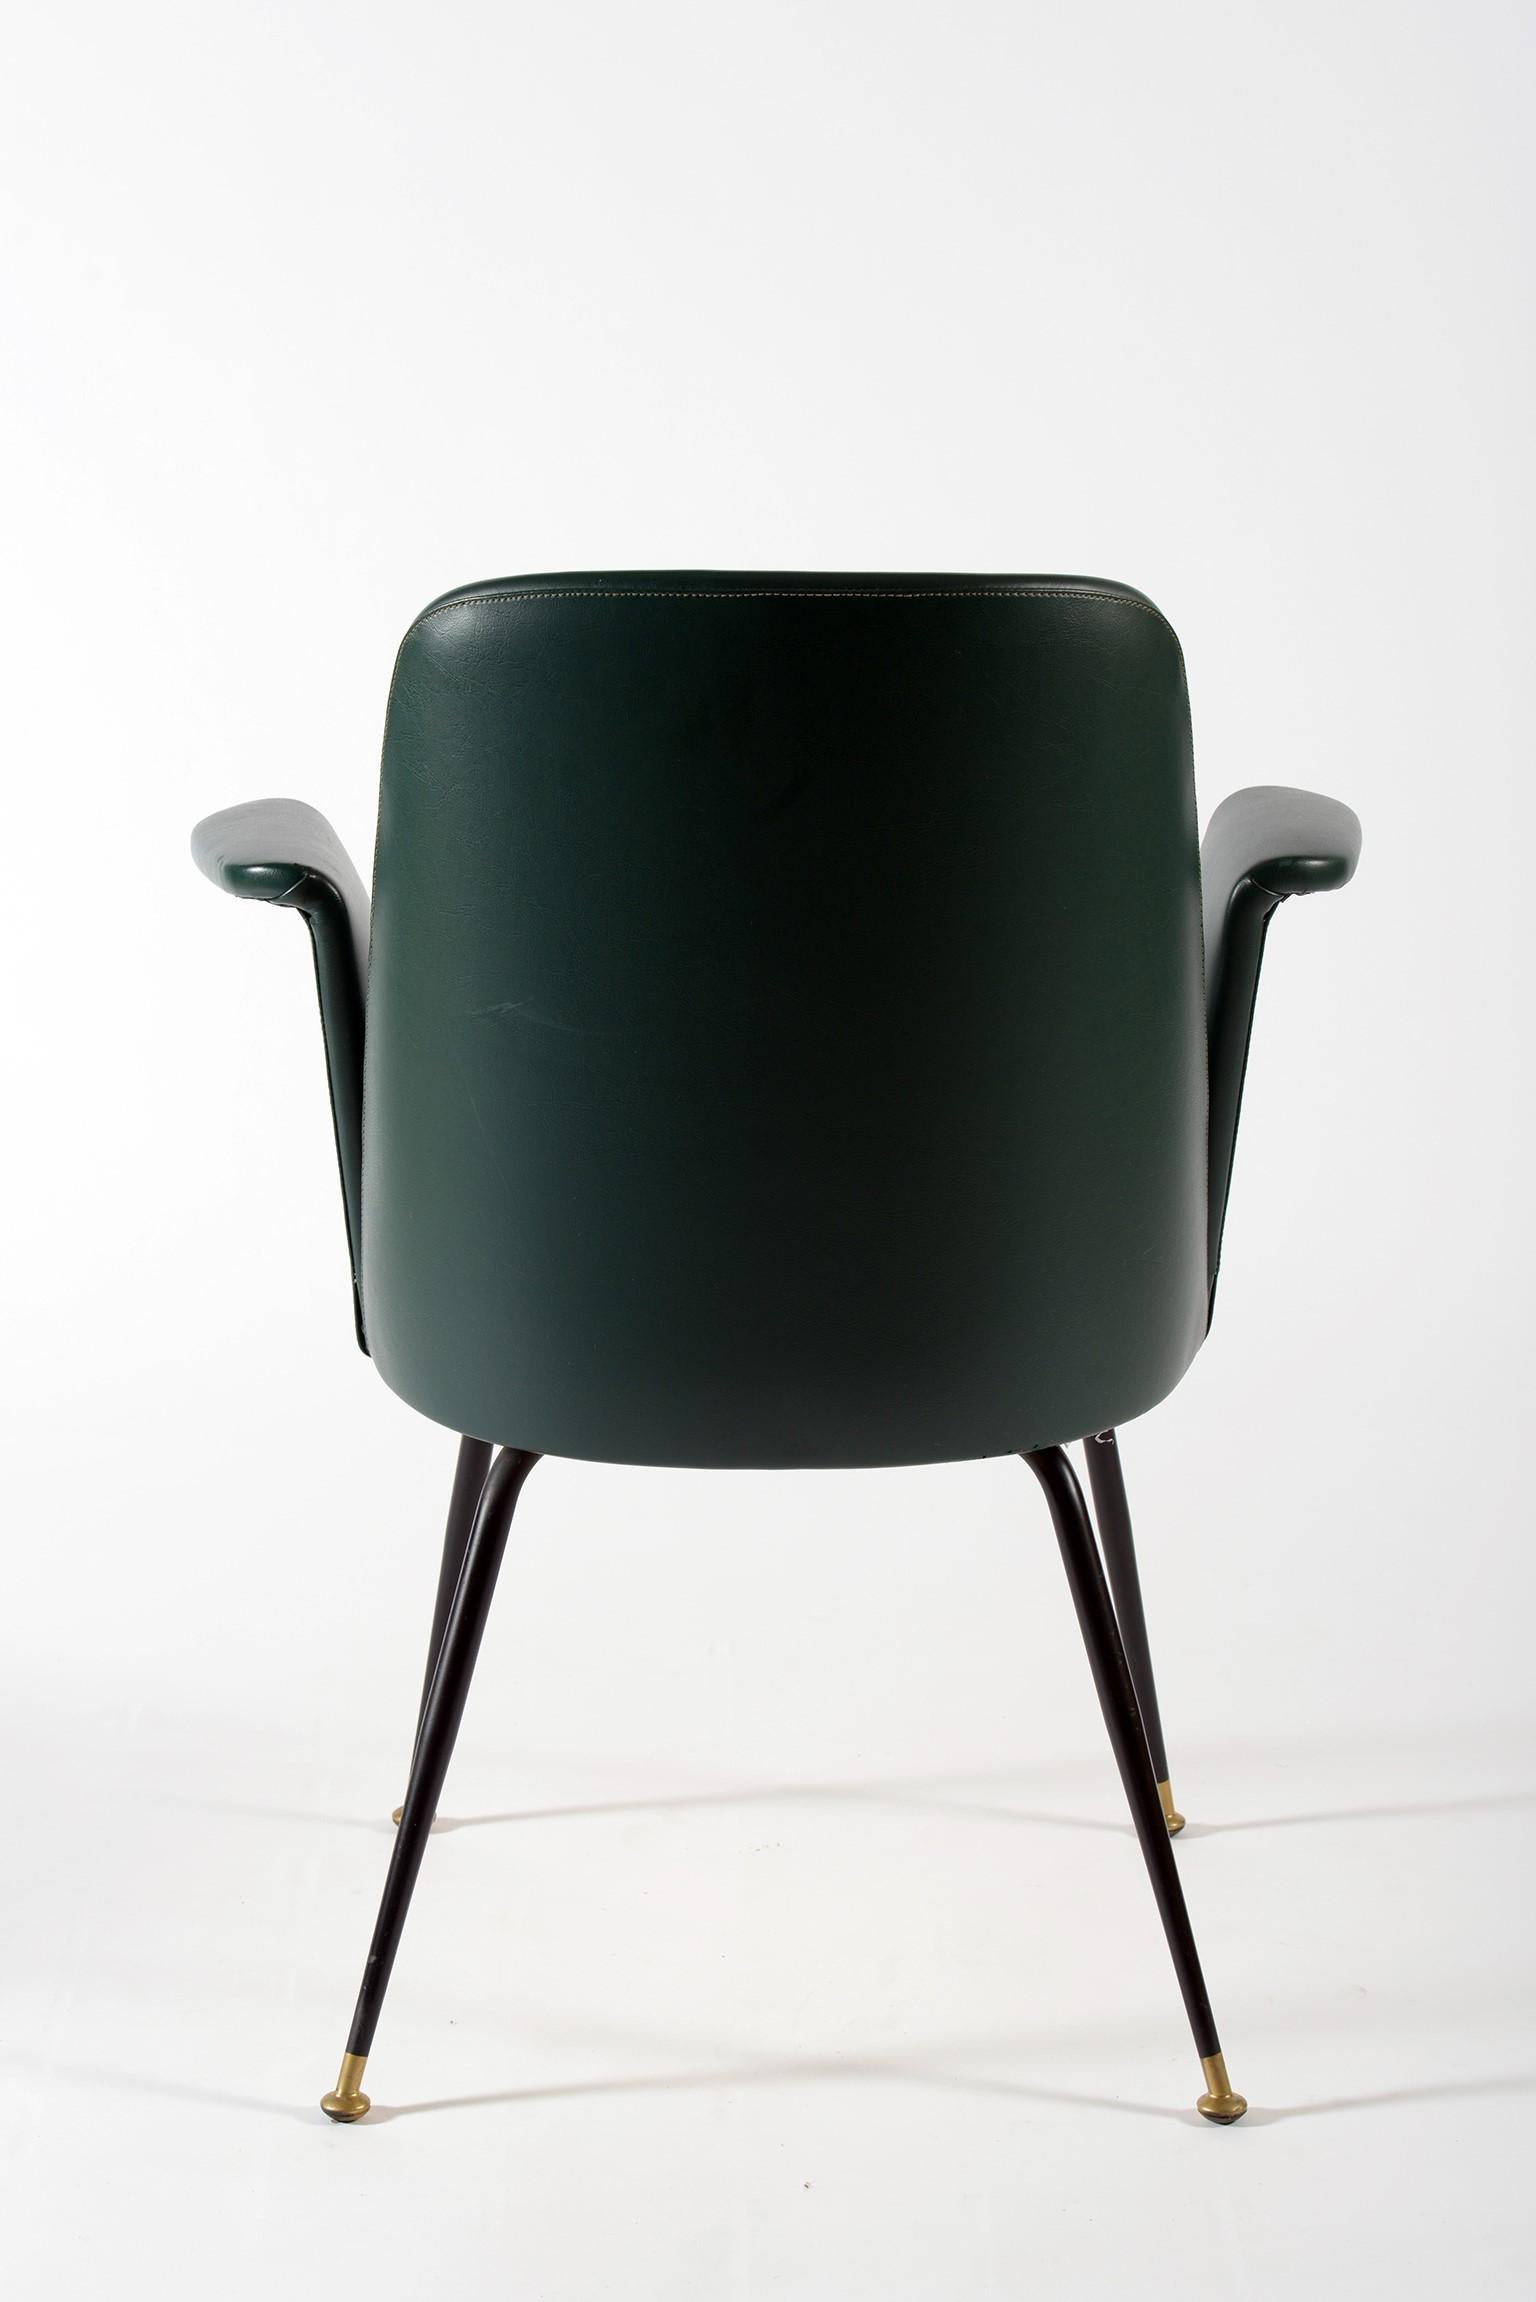 Mid-20th Century Midcentury Italian Pair of Chairs Brass Leggs Green Original Leatherette, 1950s